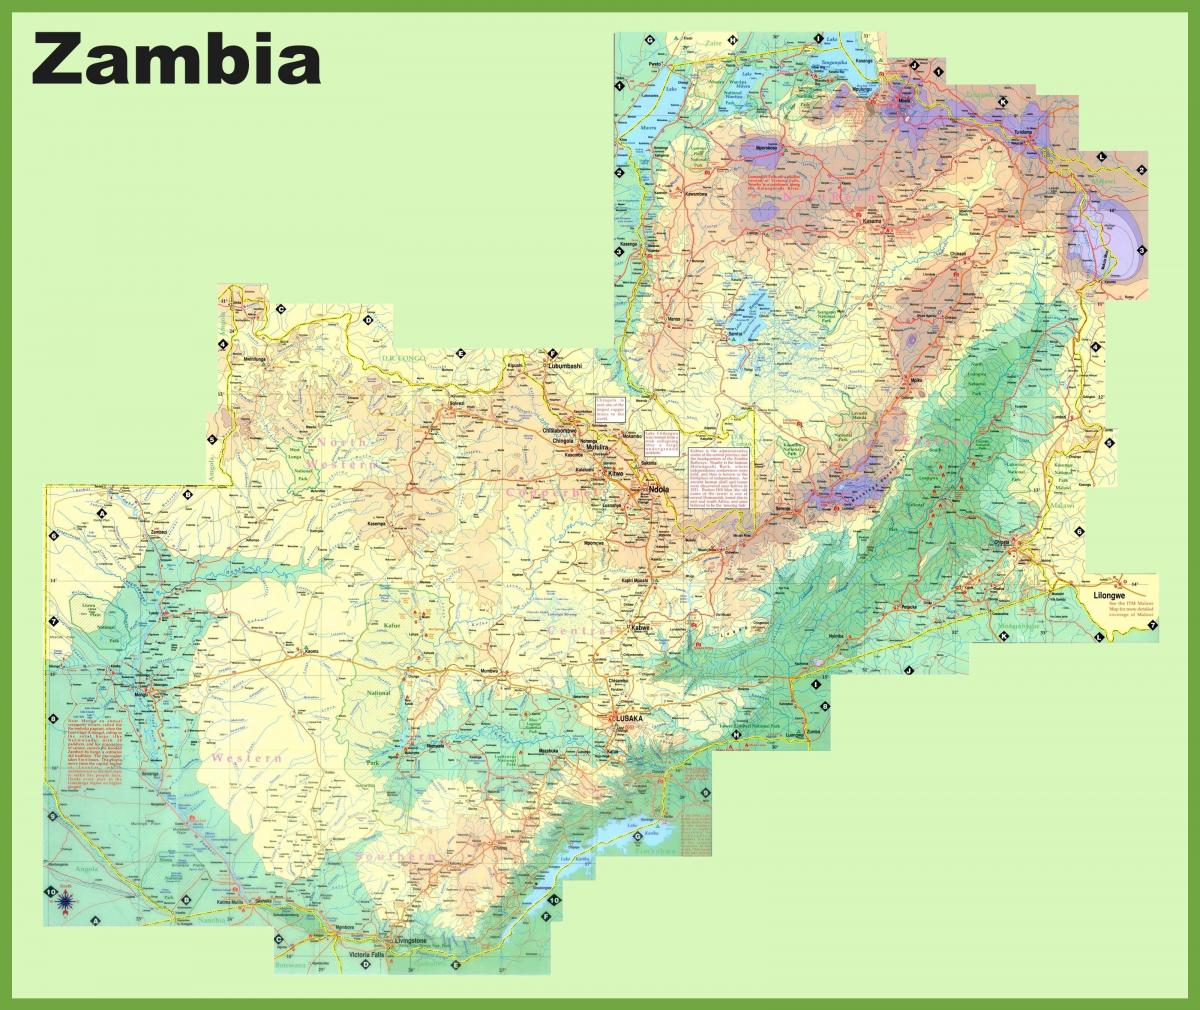 kort over Zambia, der viser alle byer